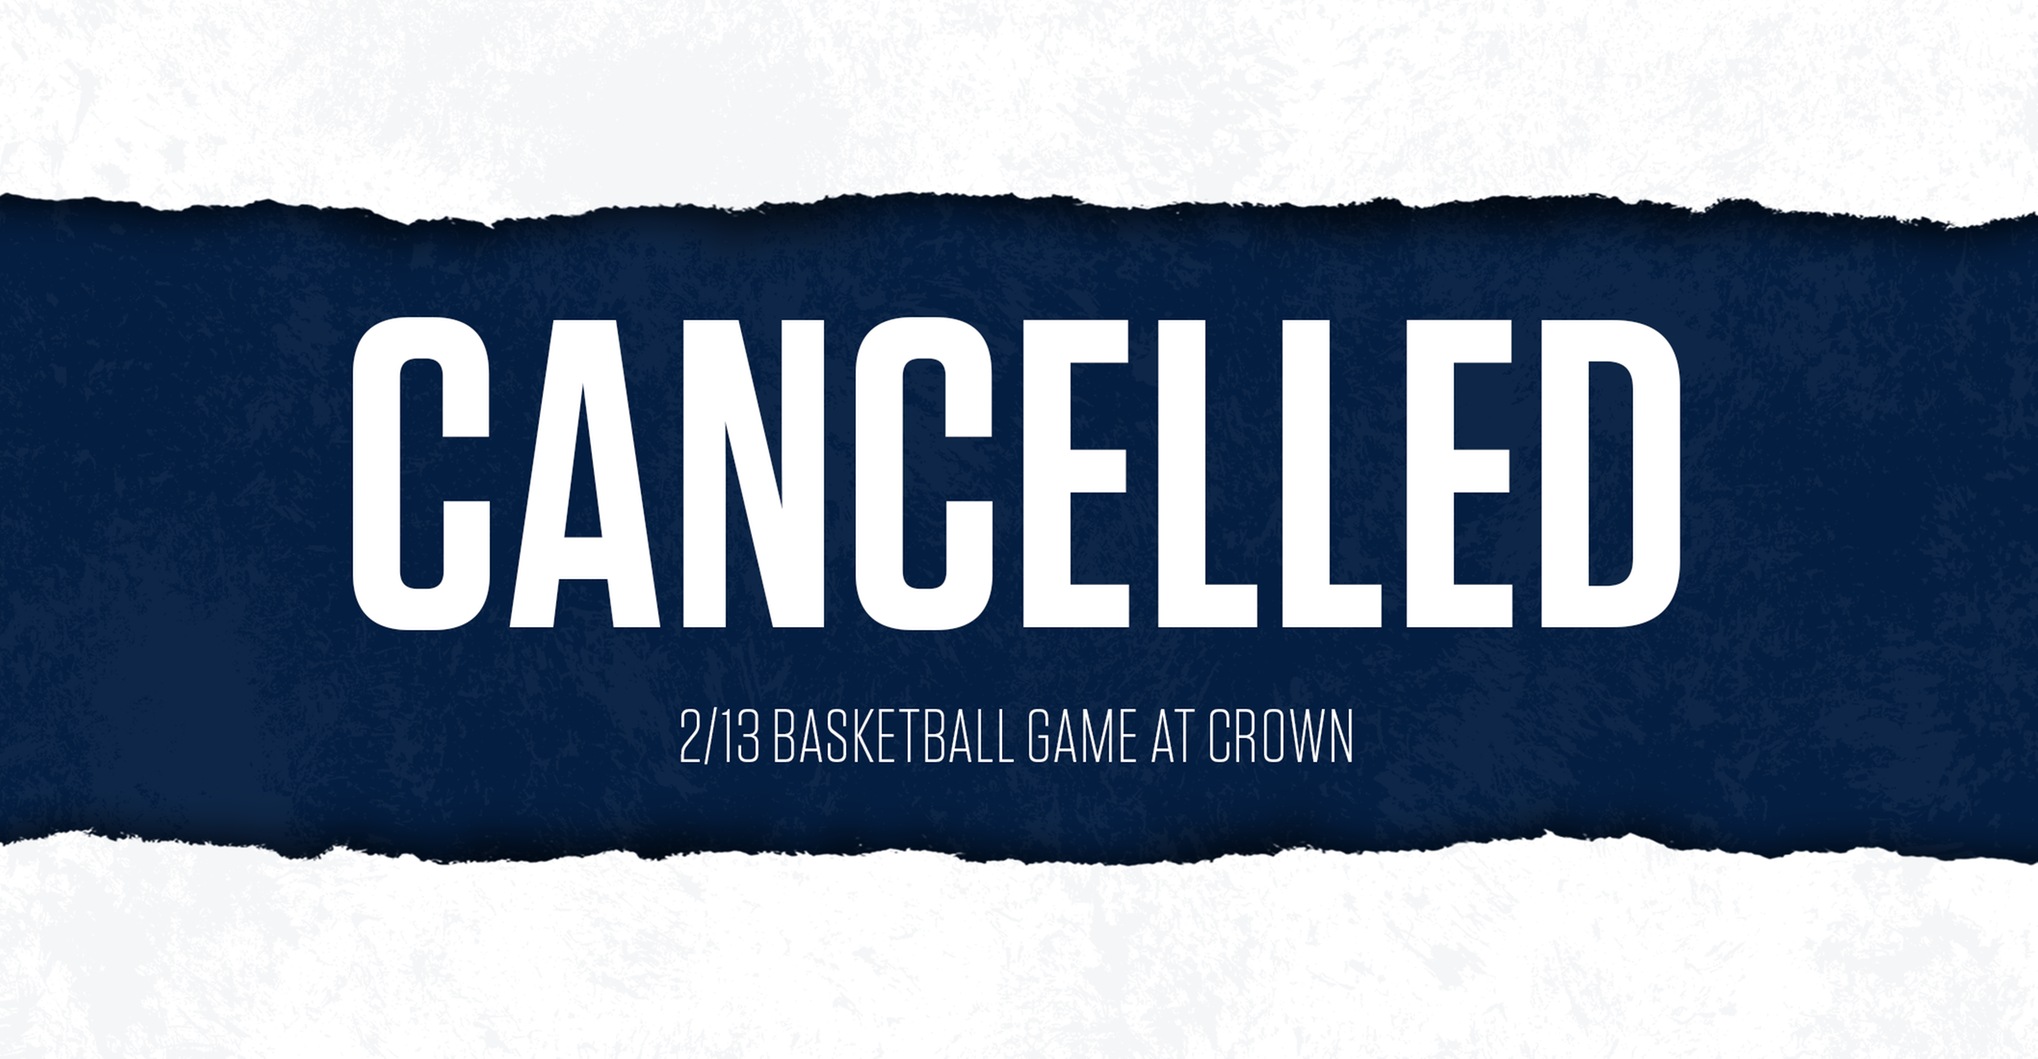 Cancelled: February 13 Men's Basketball